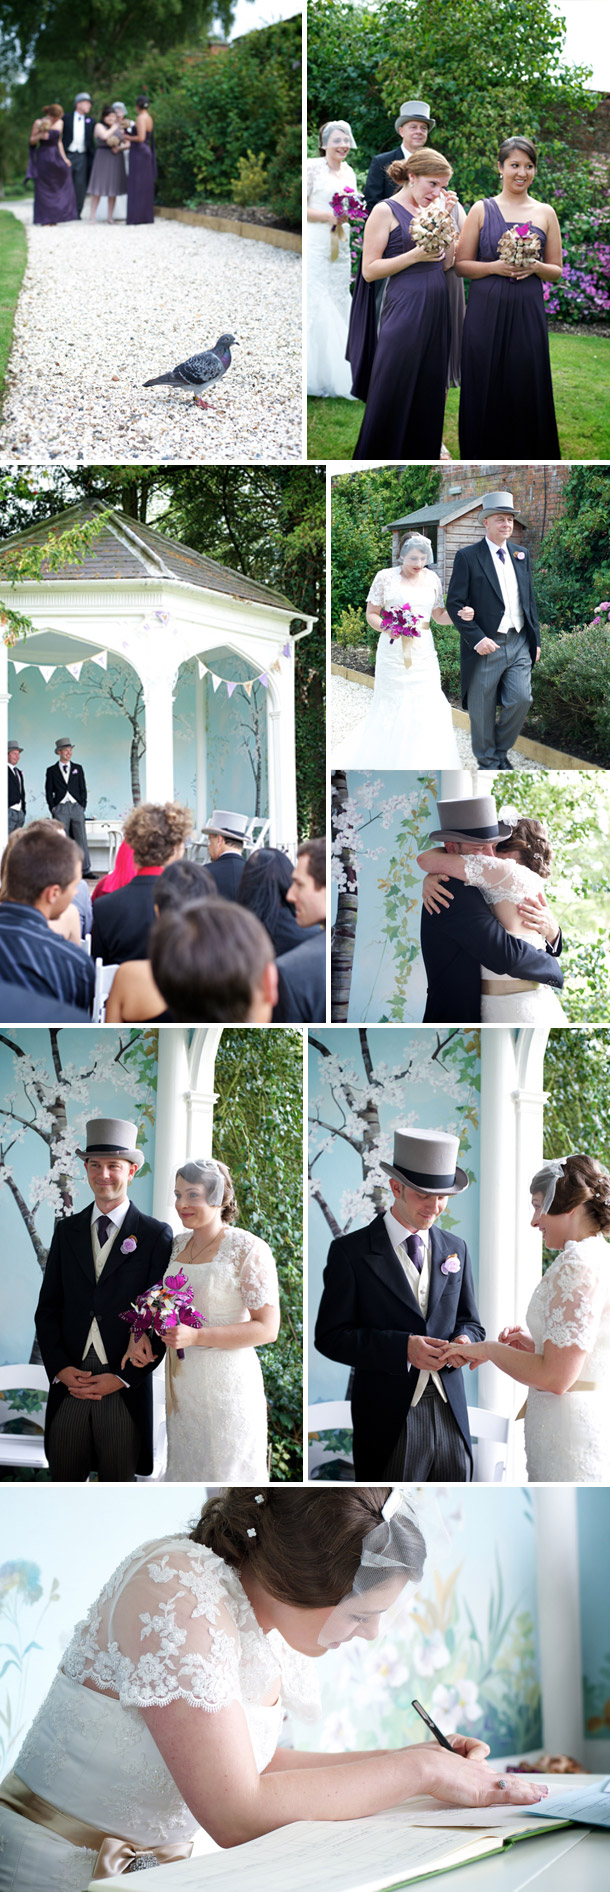 Ruth and Tristan's Hochzeit bei Michelle Joubert-Martin Photography